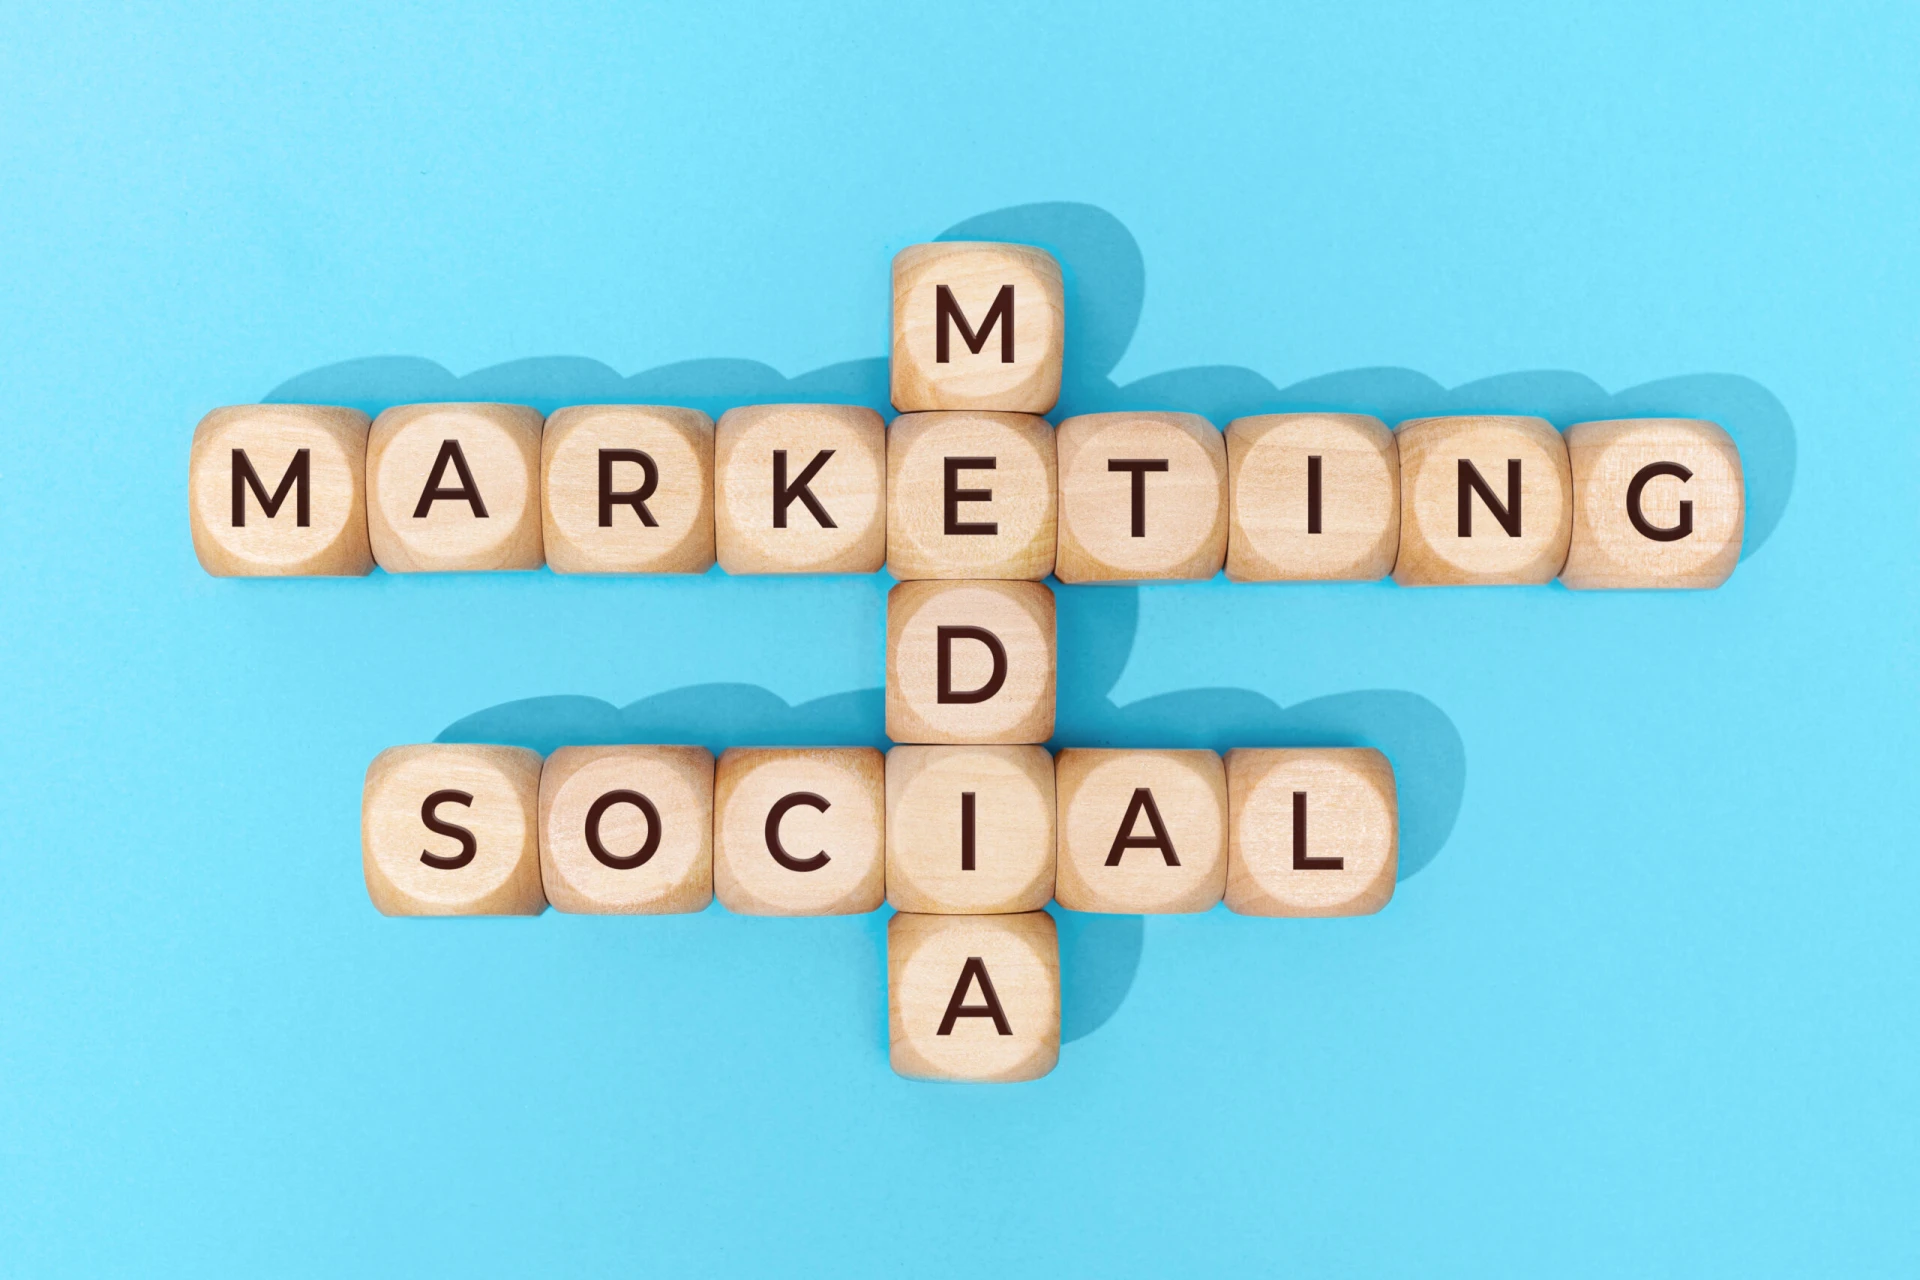 common social media marketing